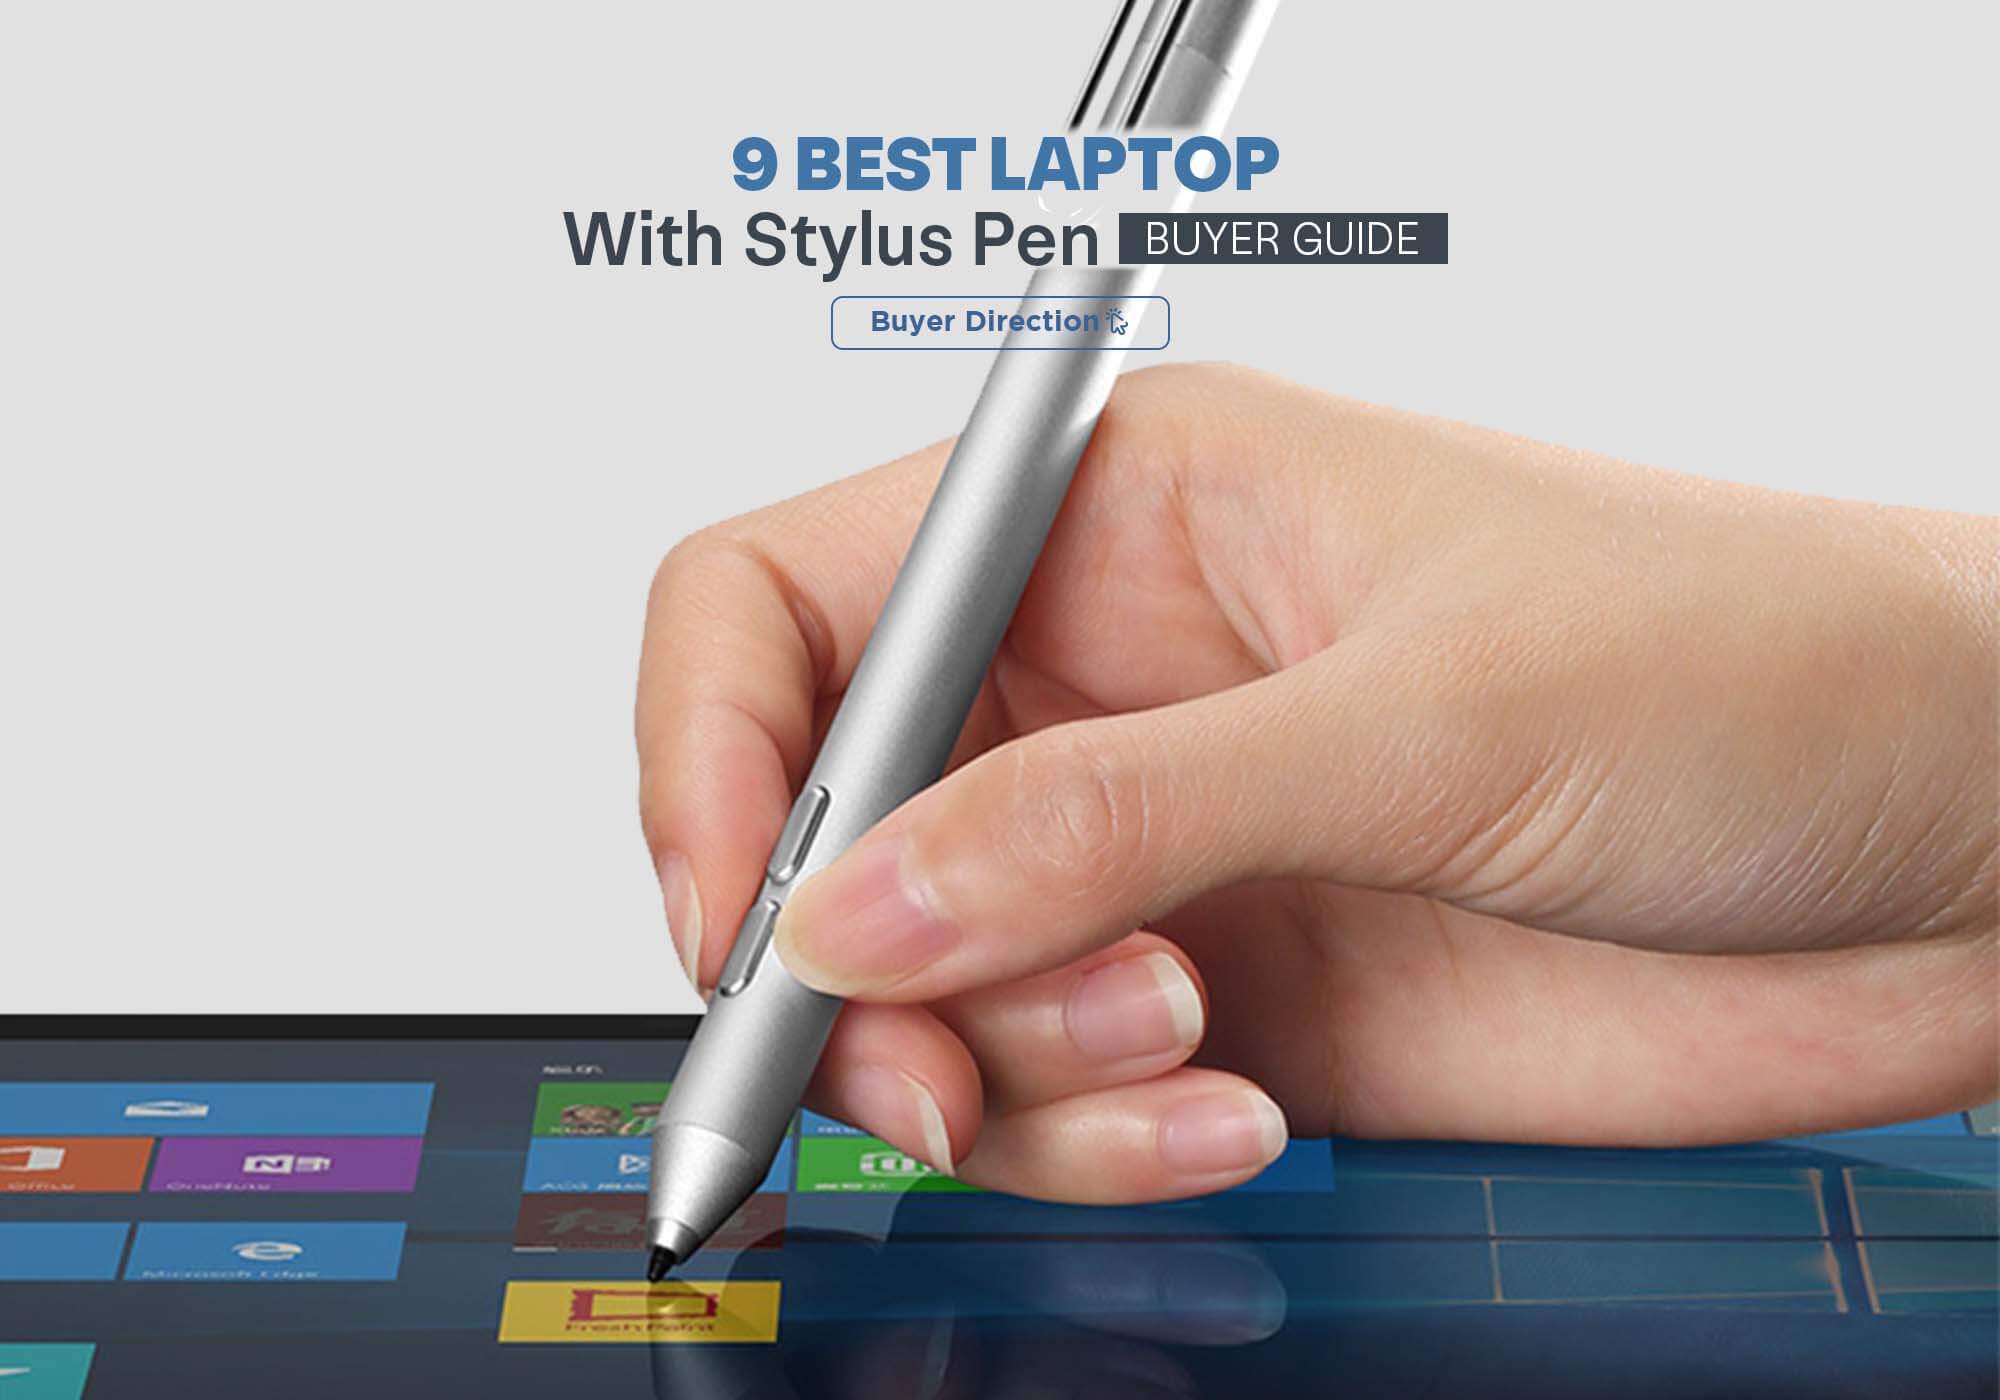 9 Best Laptop With Stylus Pen - Buyer Guide